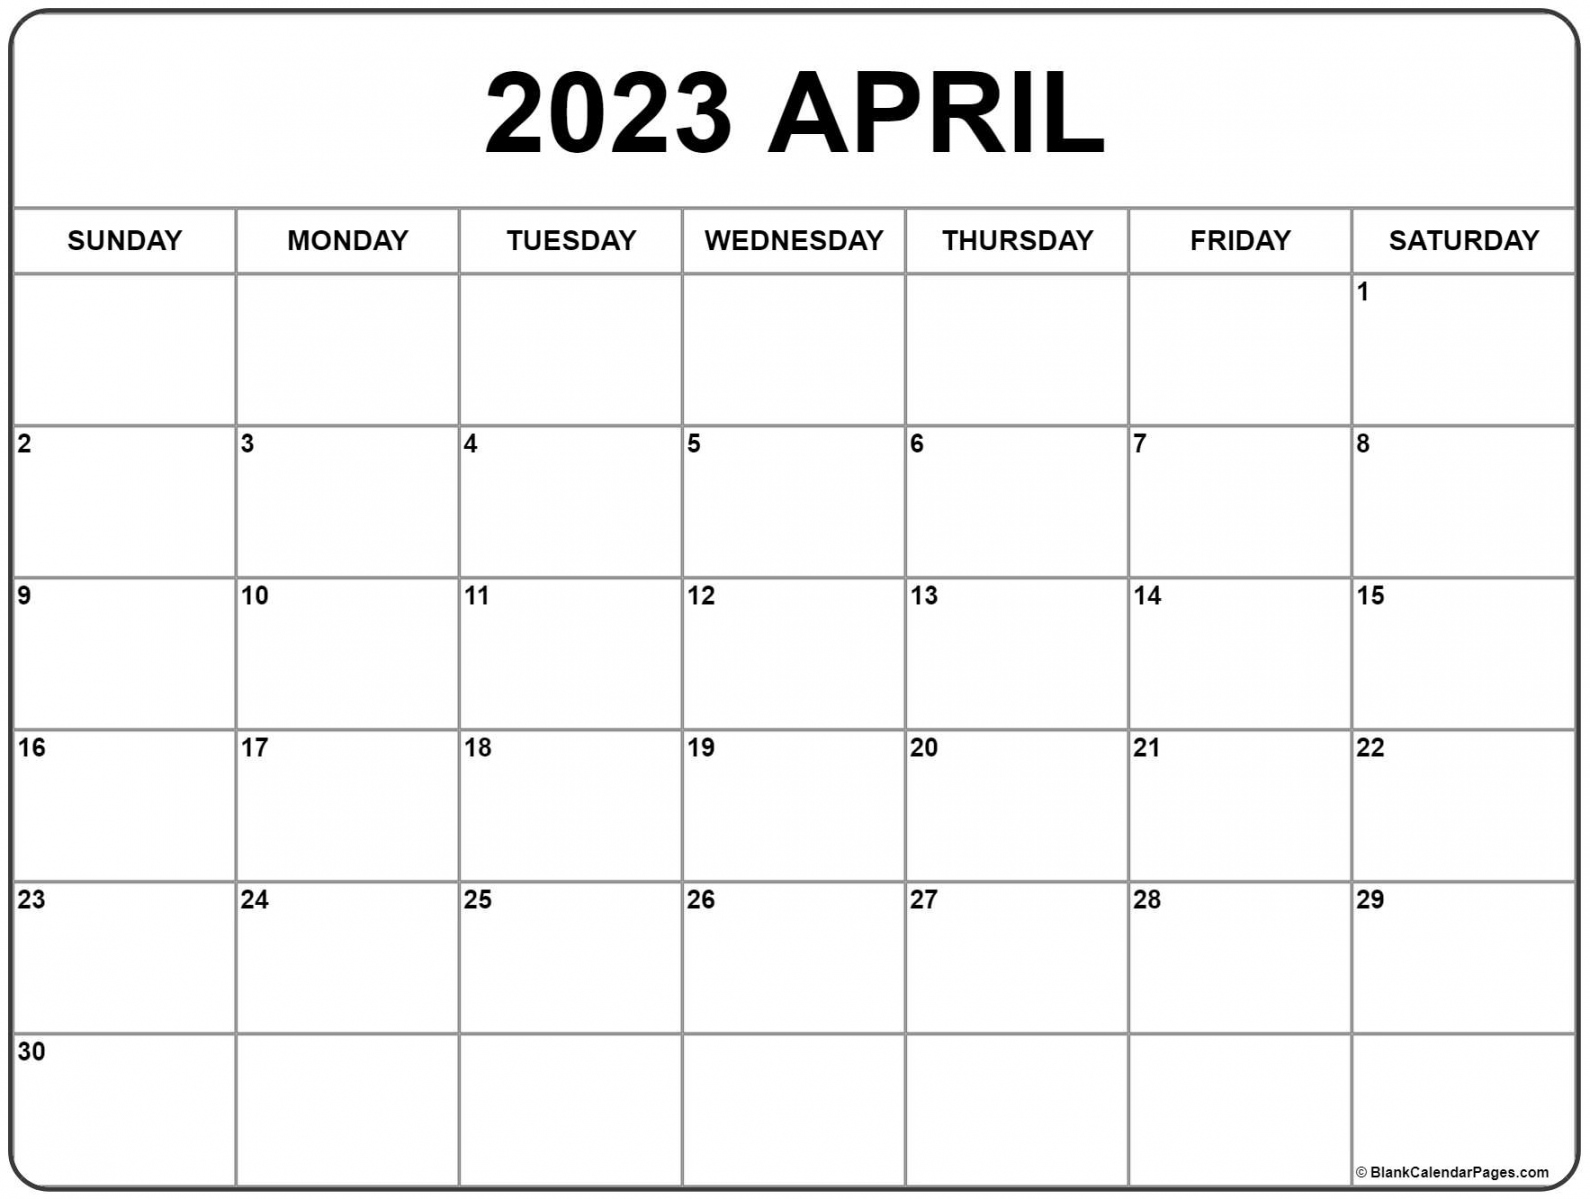 April  calendar  free printable calendar - FREE Printables - Free Printable Calendar April 2023